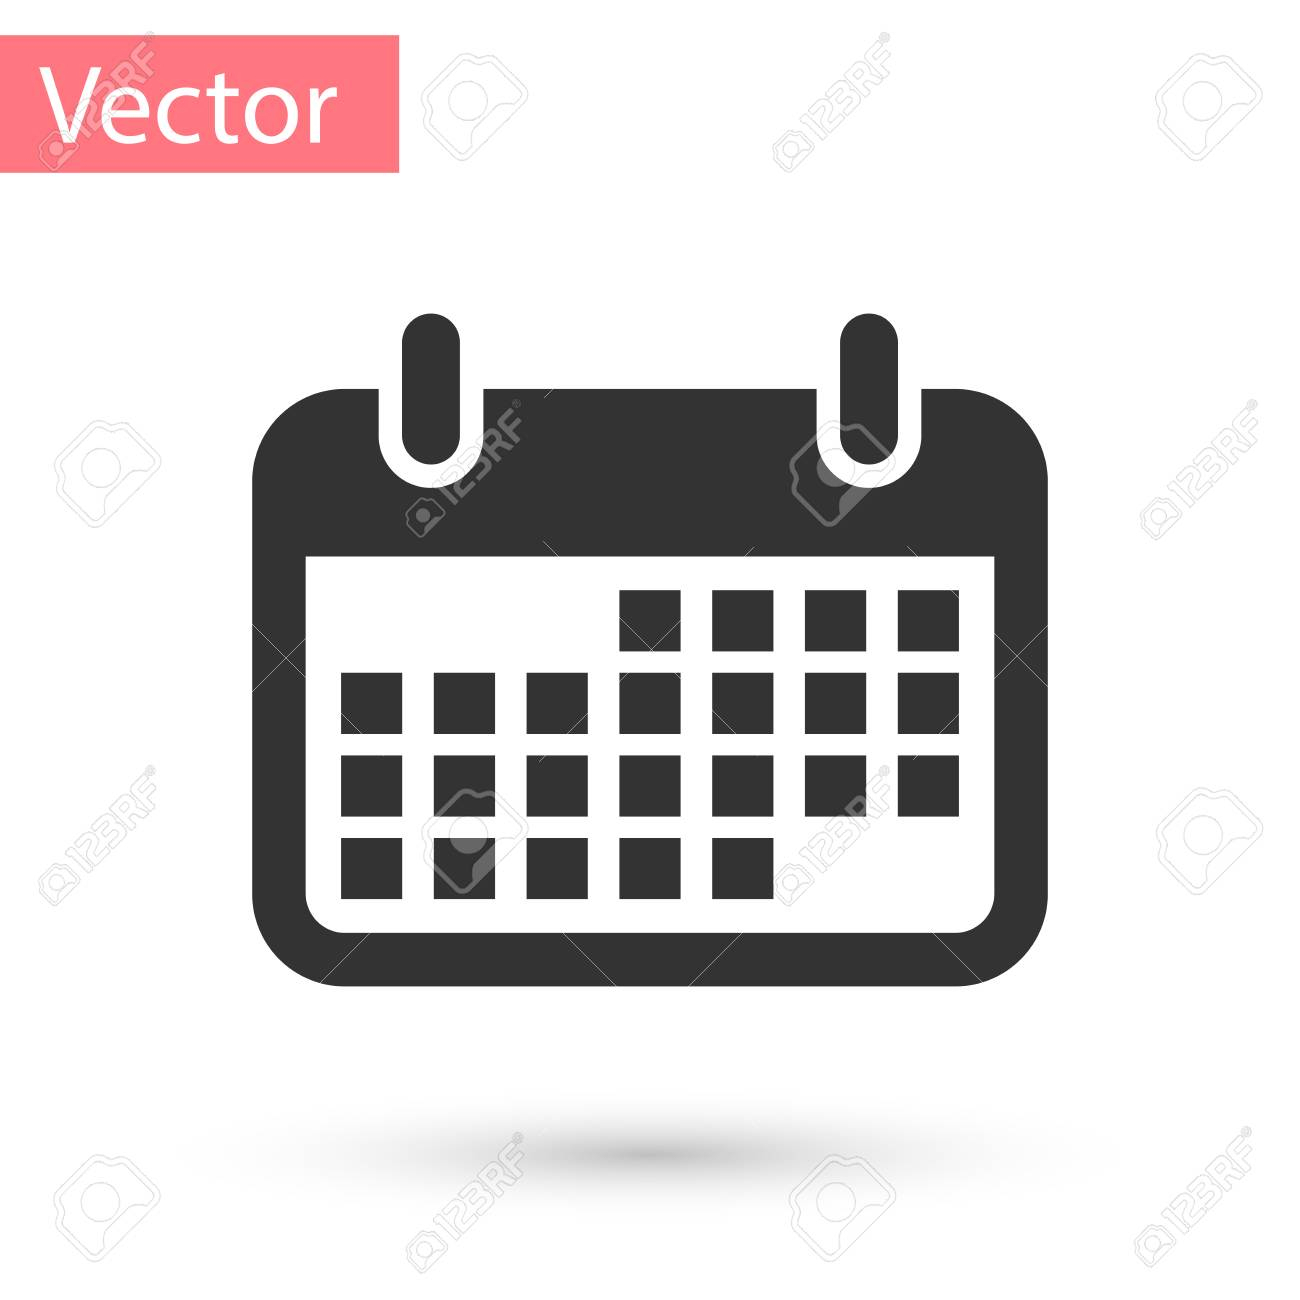 Grey Calendar Icon Isolated On White Background. Vector Illustration inside Calendar Icon Grey